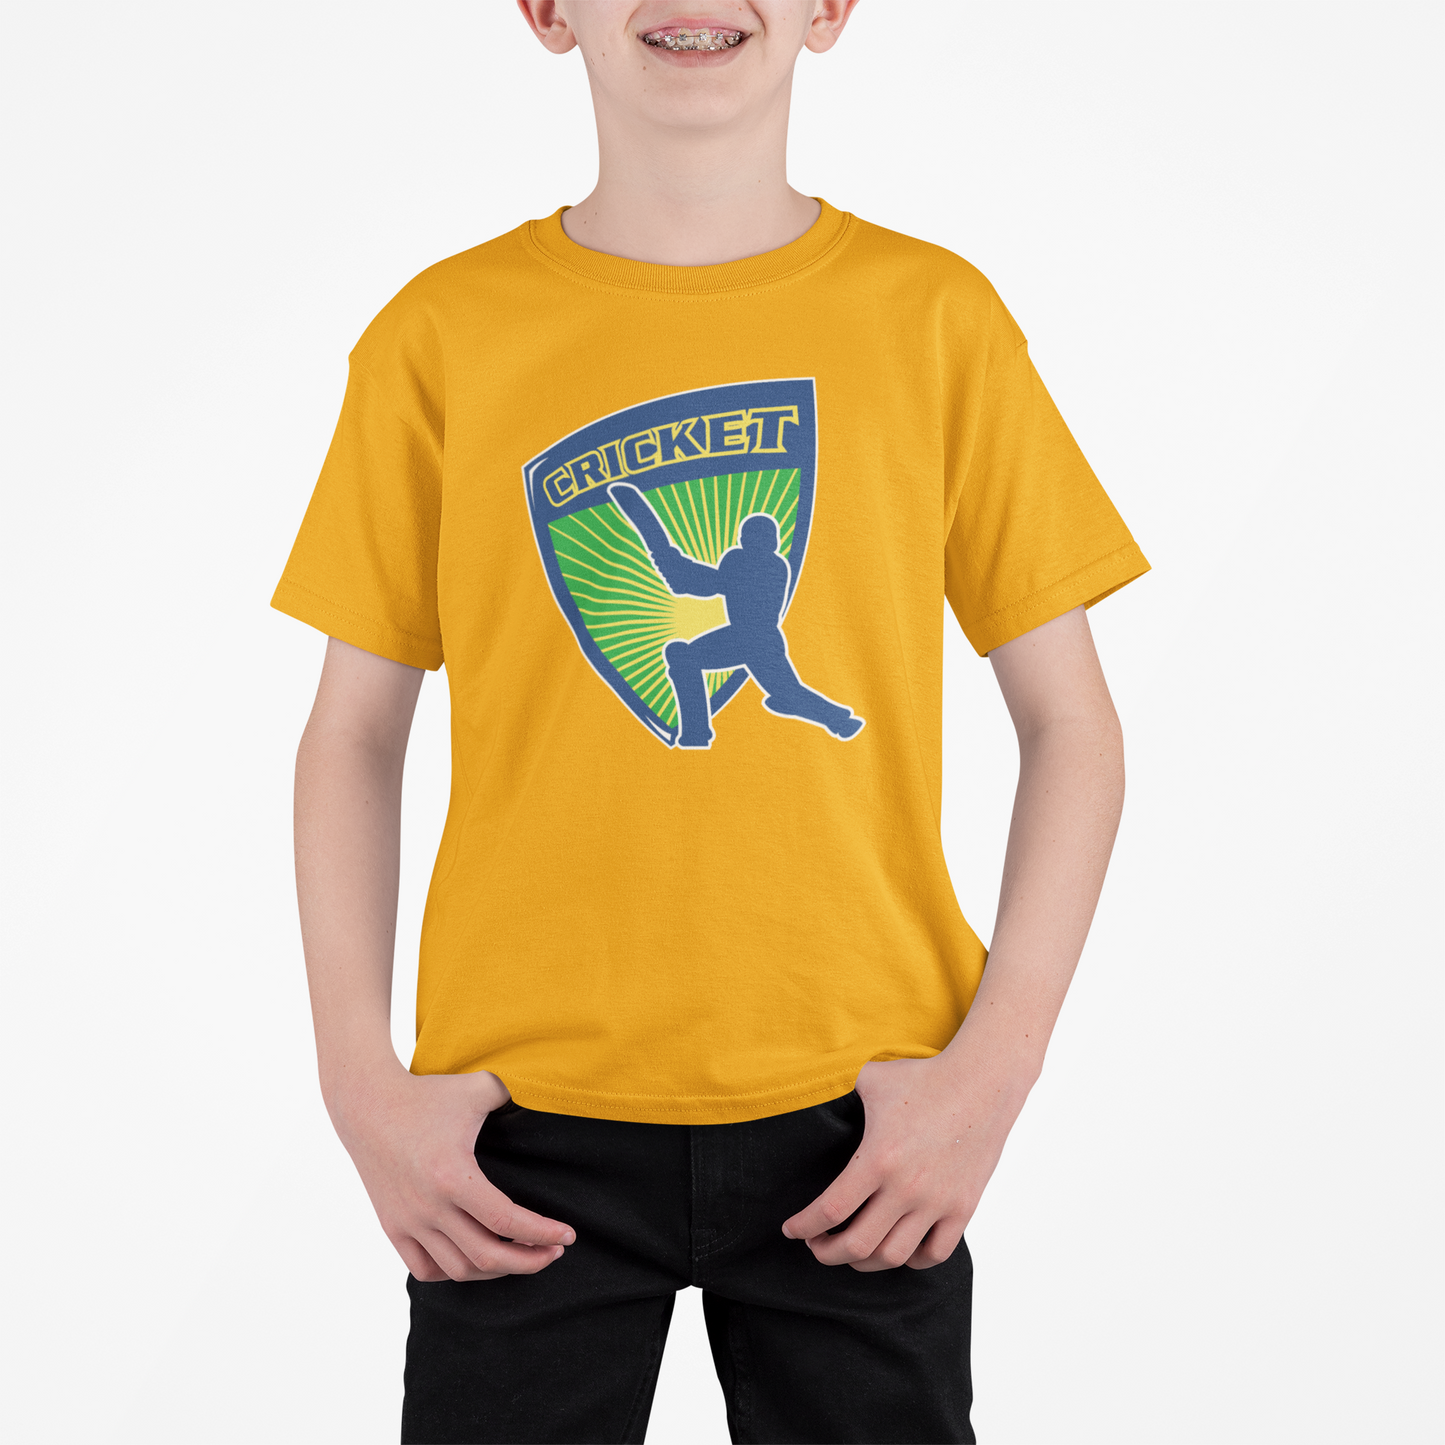 Cricketer T-shirt for Boys Golden Yellow